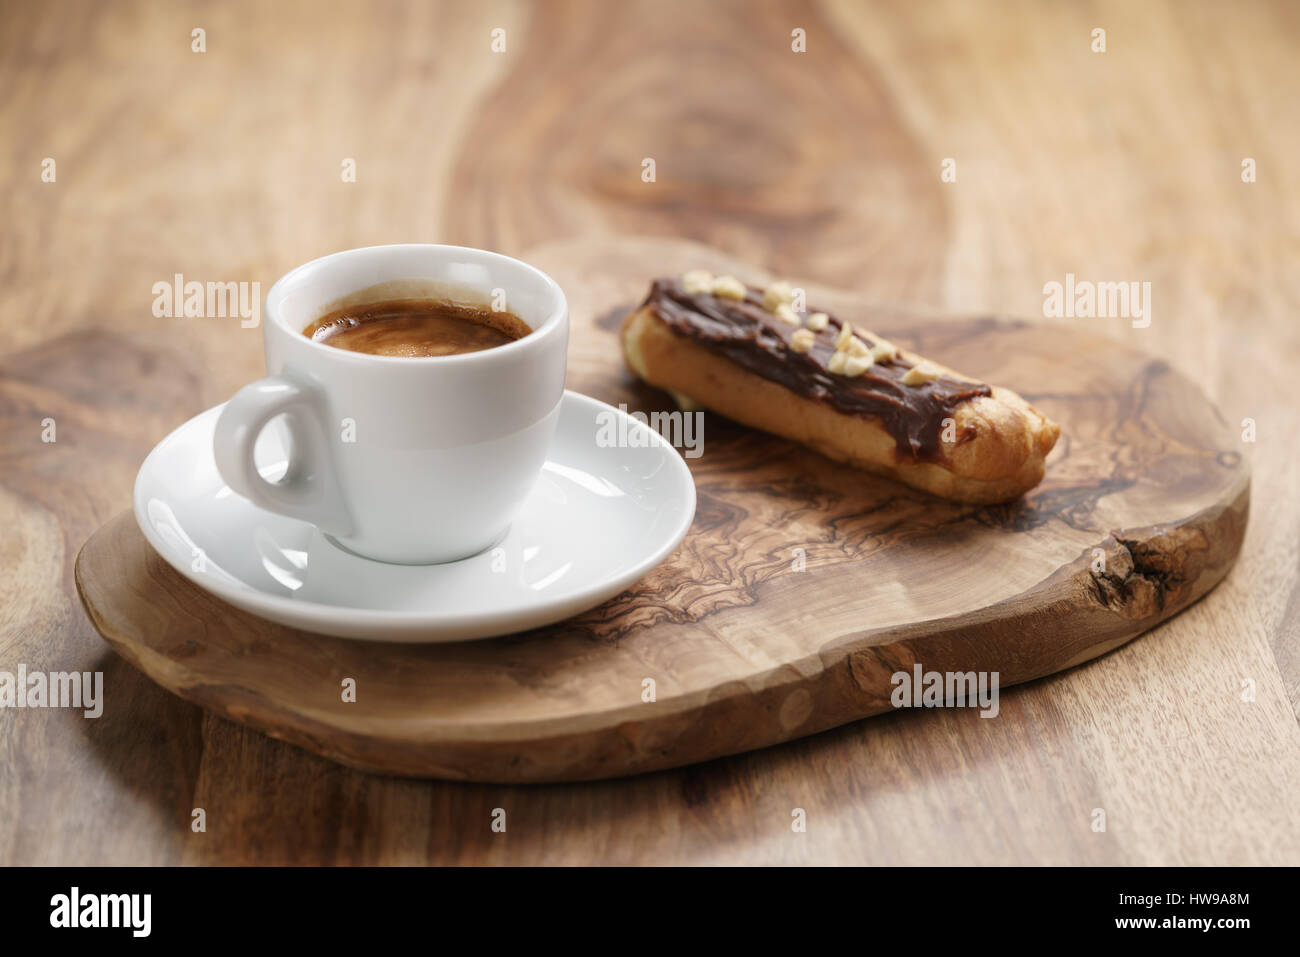 fresh espresso and eclair with hazelnuts Stock Photo